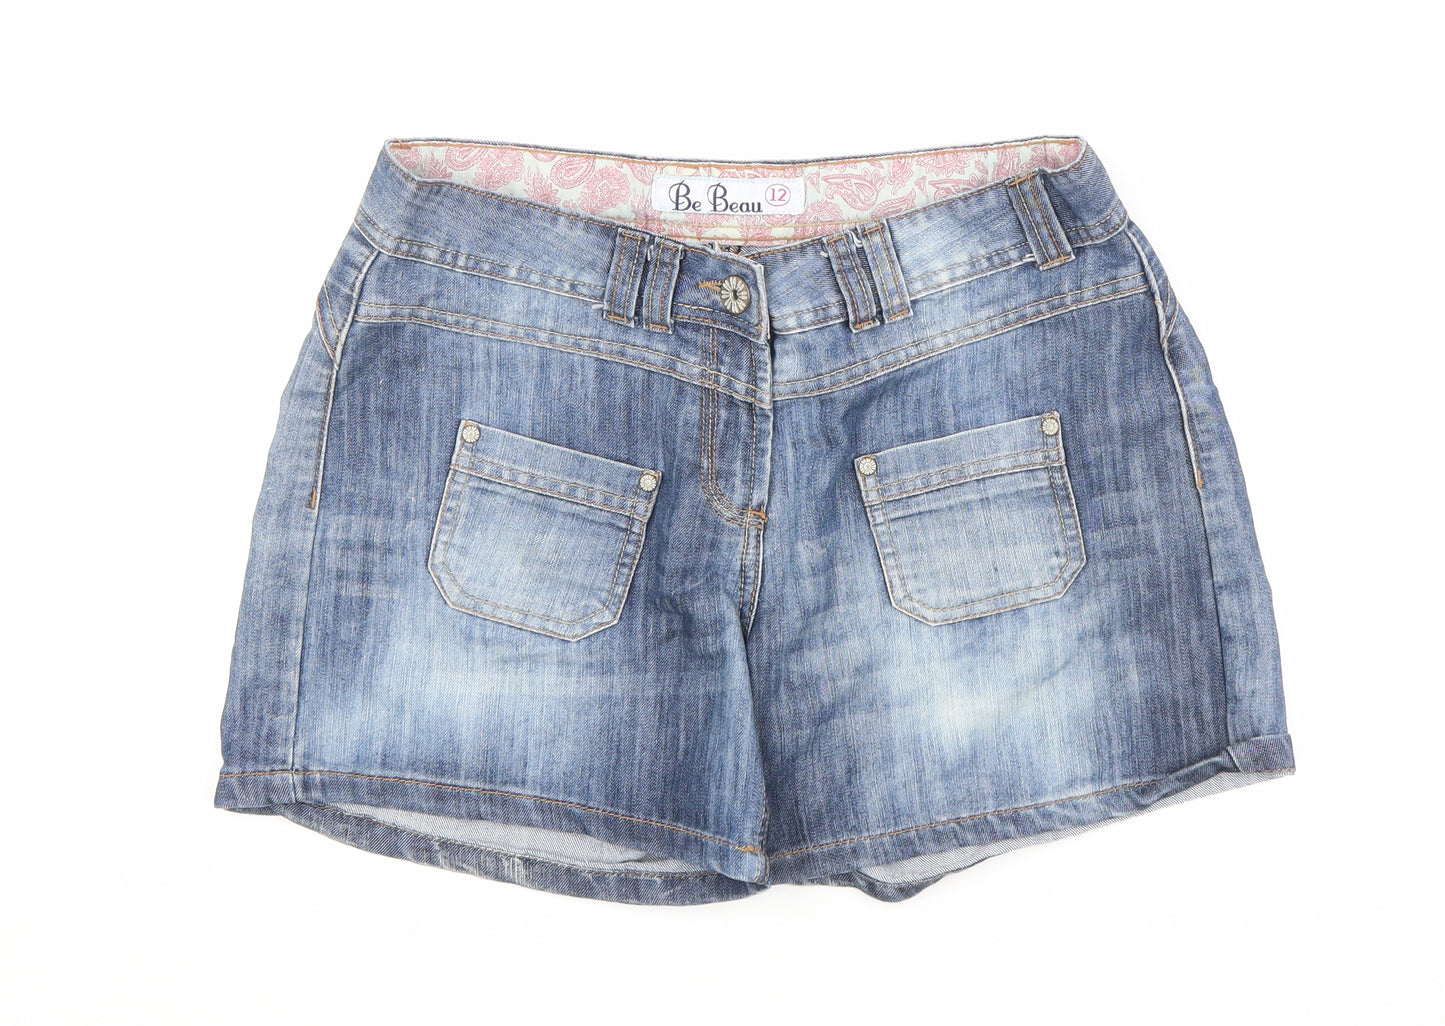 Be Beau Womens Blue Cotton Hot Pants Shorts Size 12 L4.5 in Regular Zip